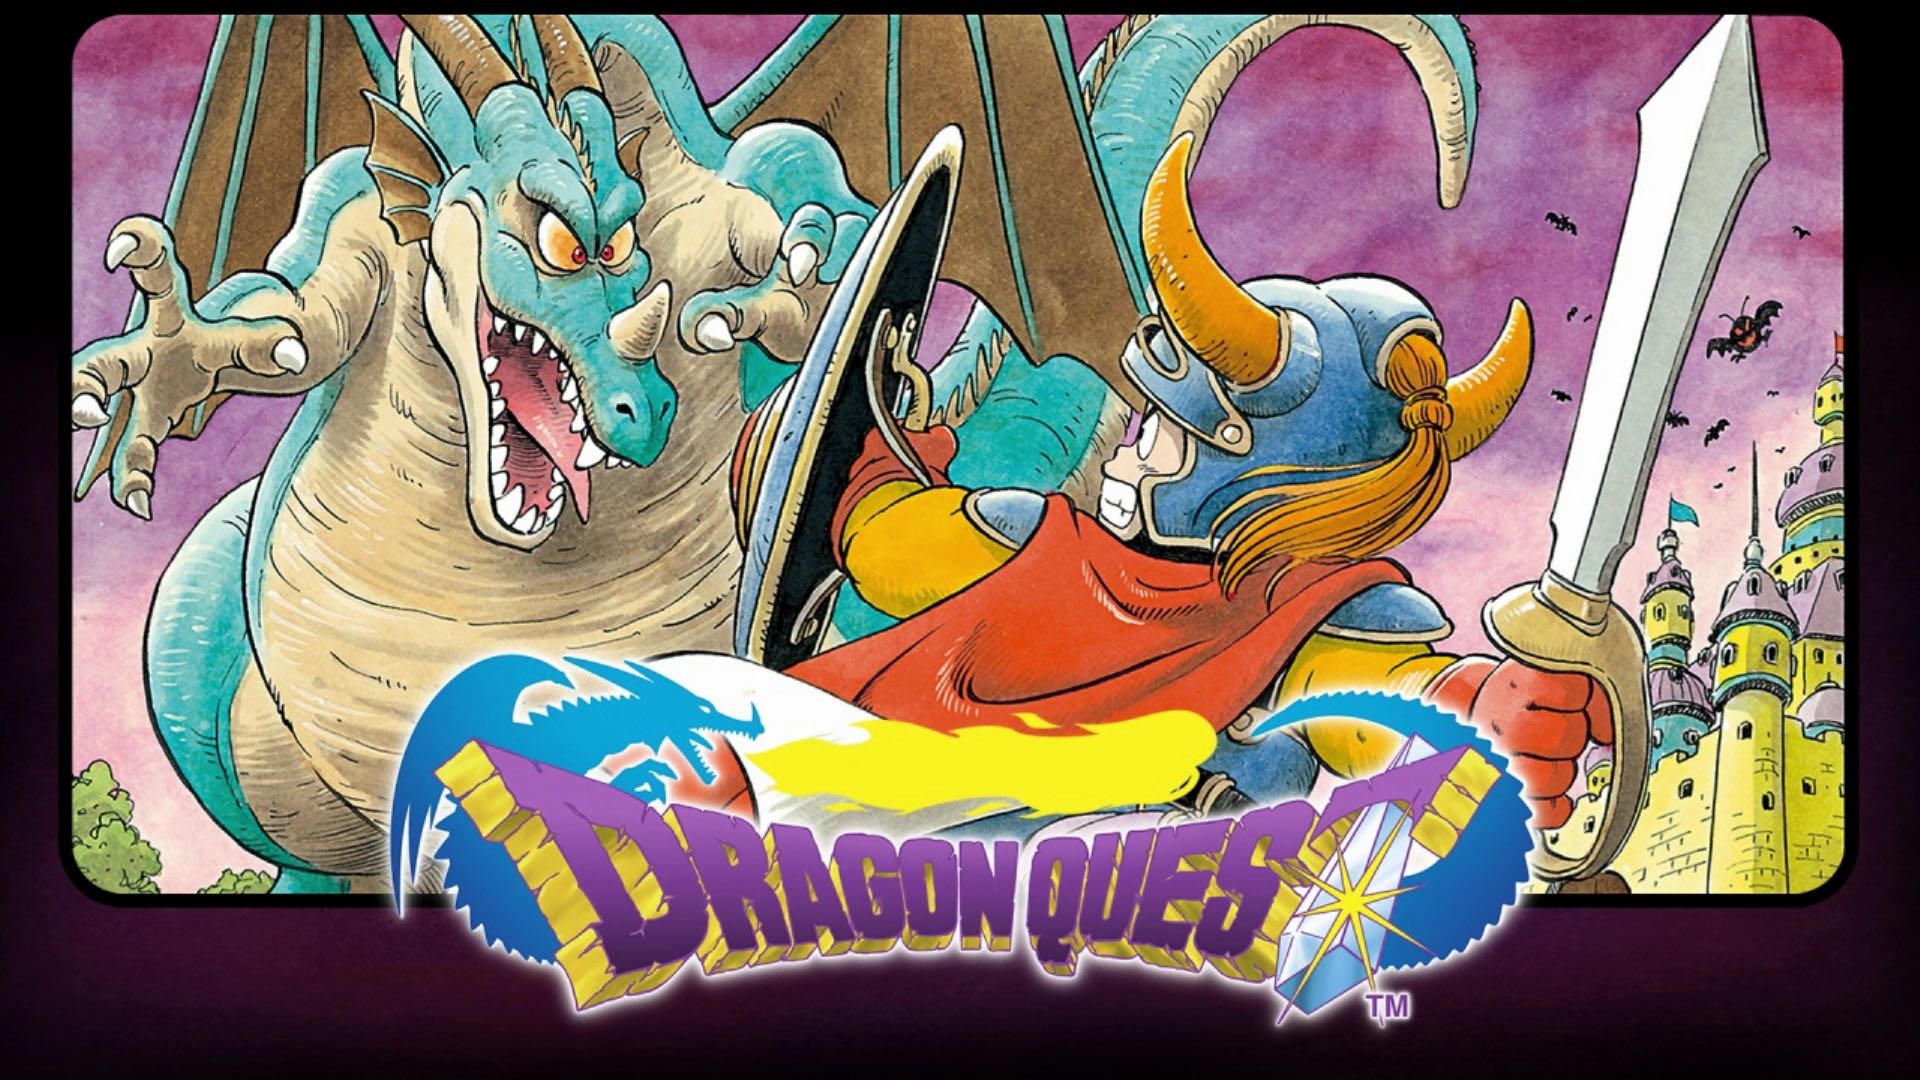 Dragon Quest Logo